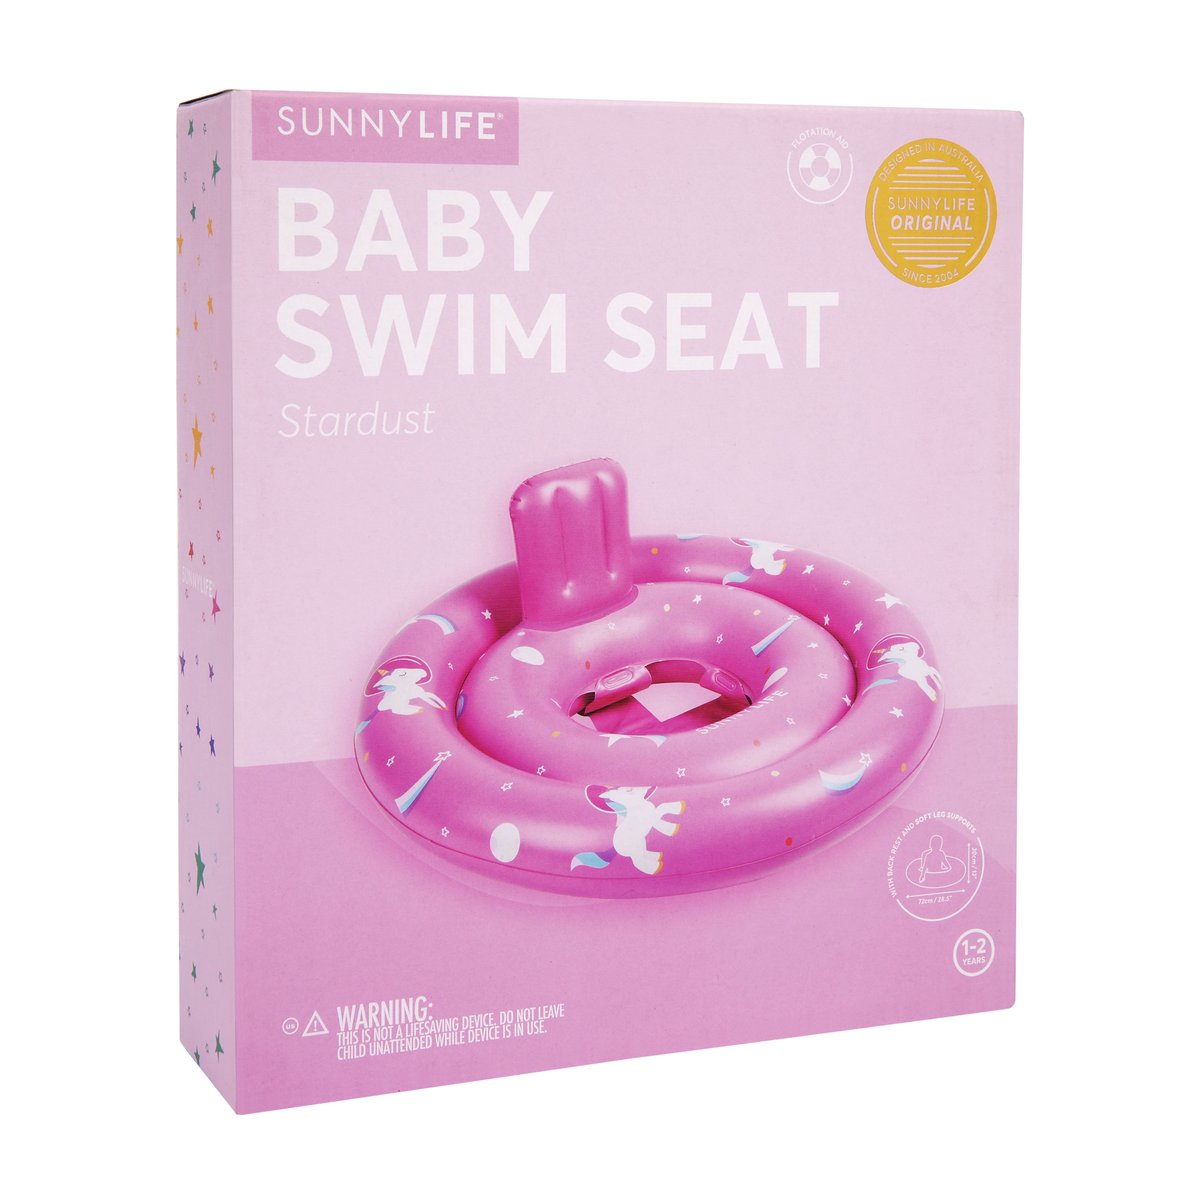 Baby Swim Seat - Stardust